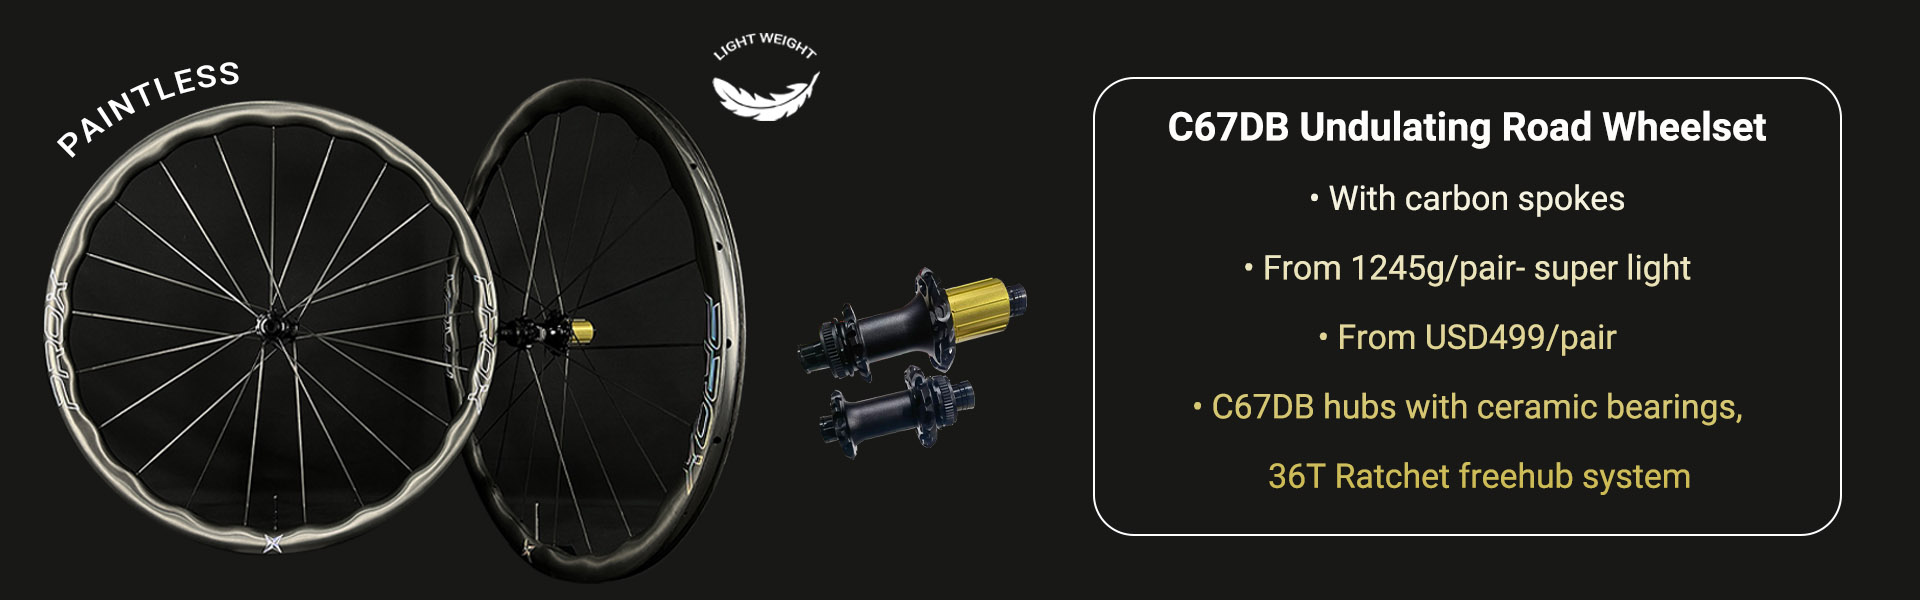 ProX Super Light Carbon Spoke Wheels C67DB Undulating Road Wheelset